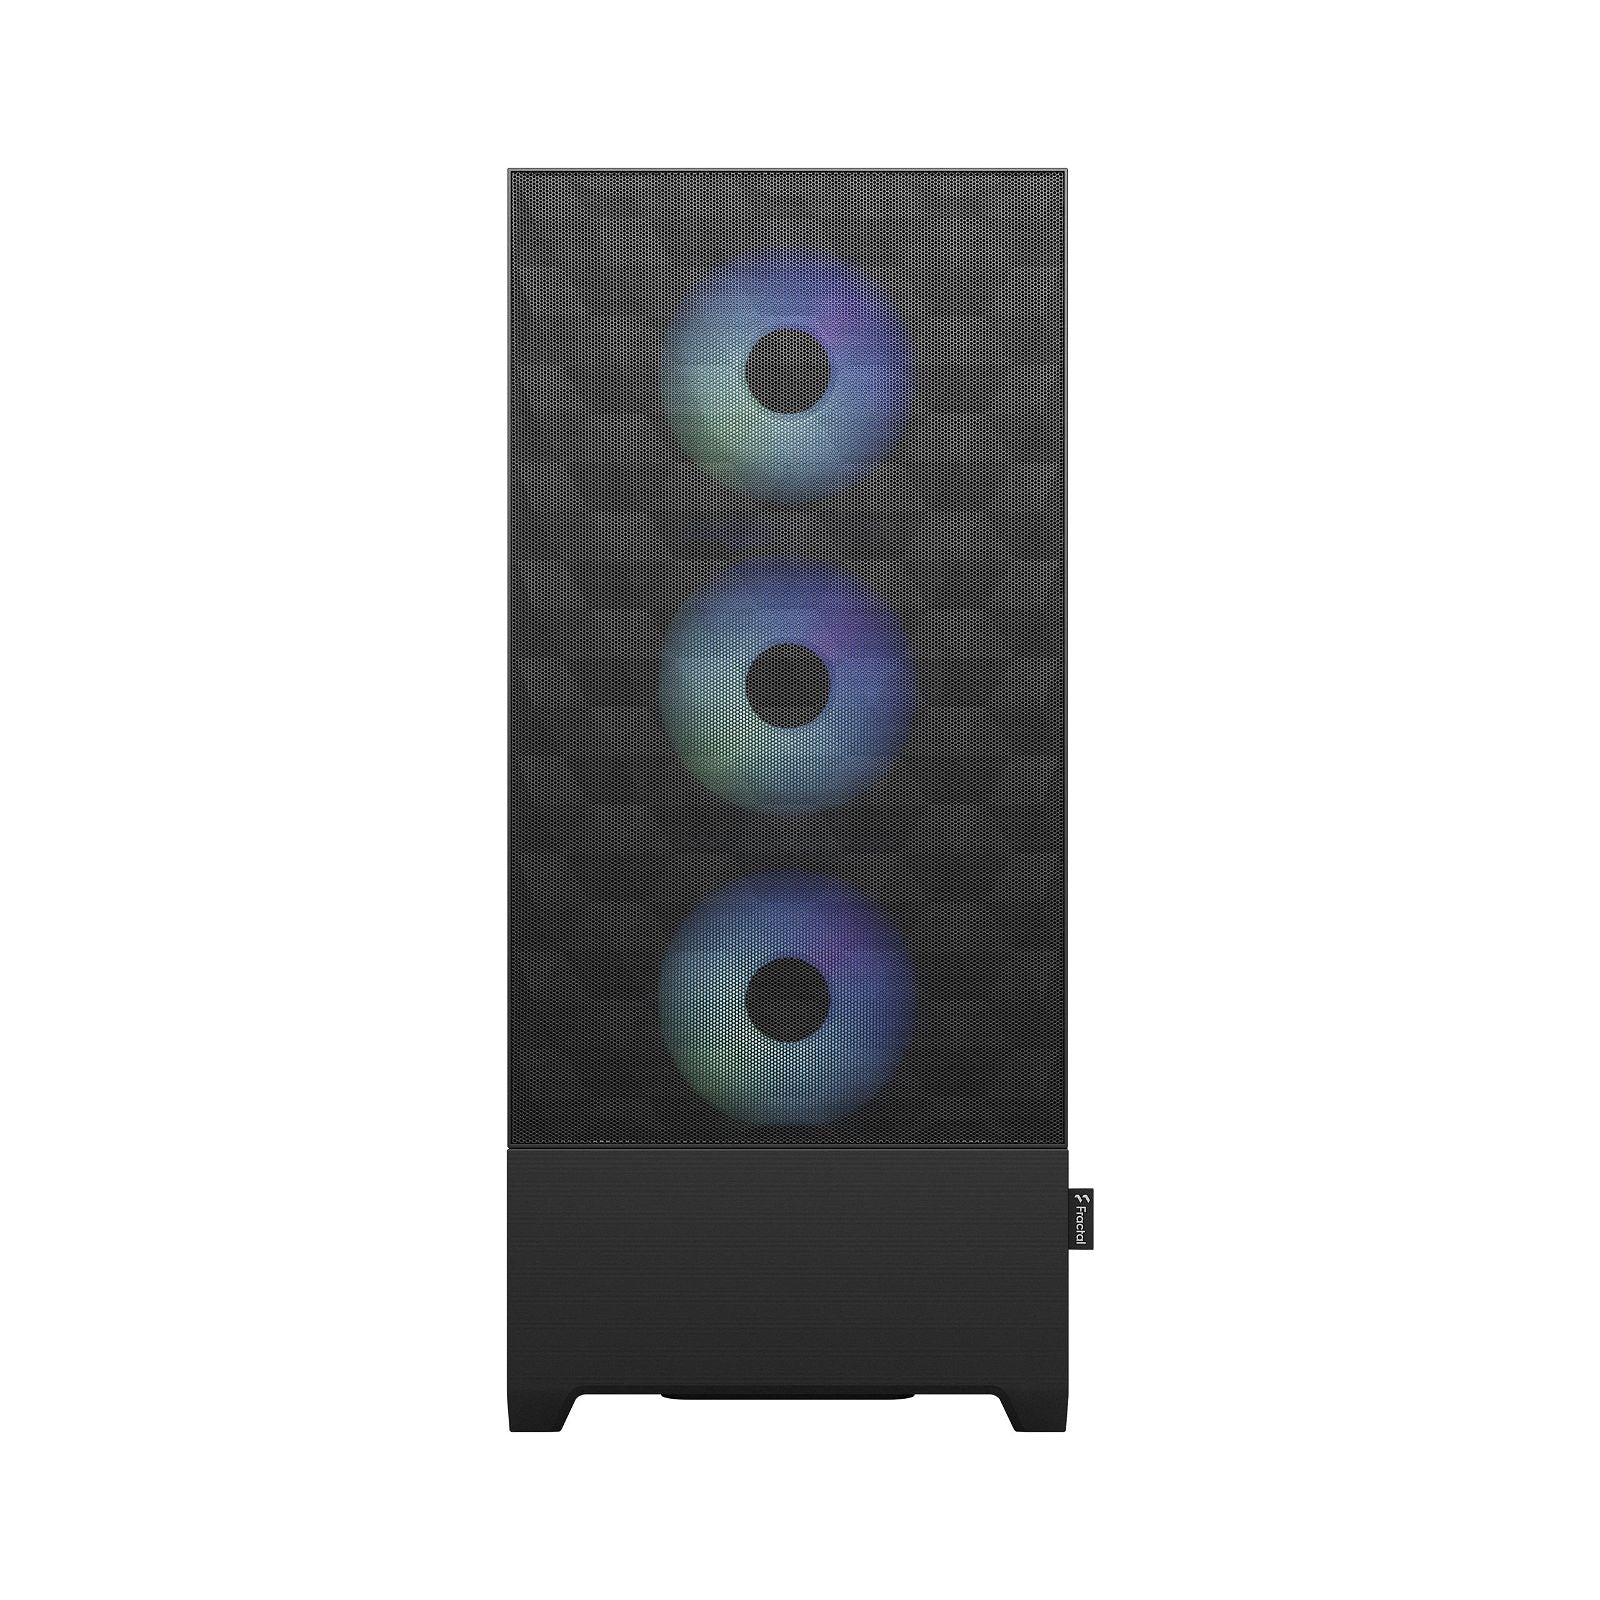 FRACTAL CASE TOWER POP XL AIR RGB BLACK TG CLEAR TINT - OVERCLOCK Computer